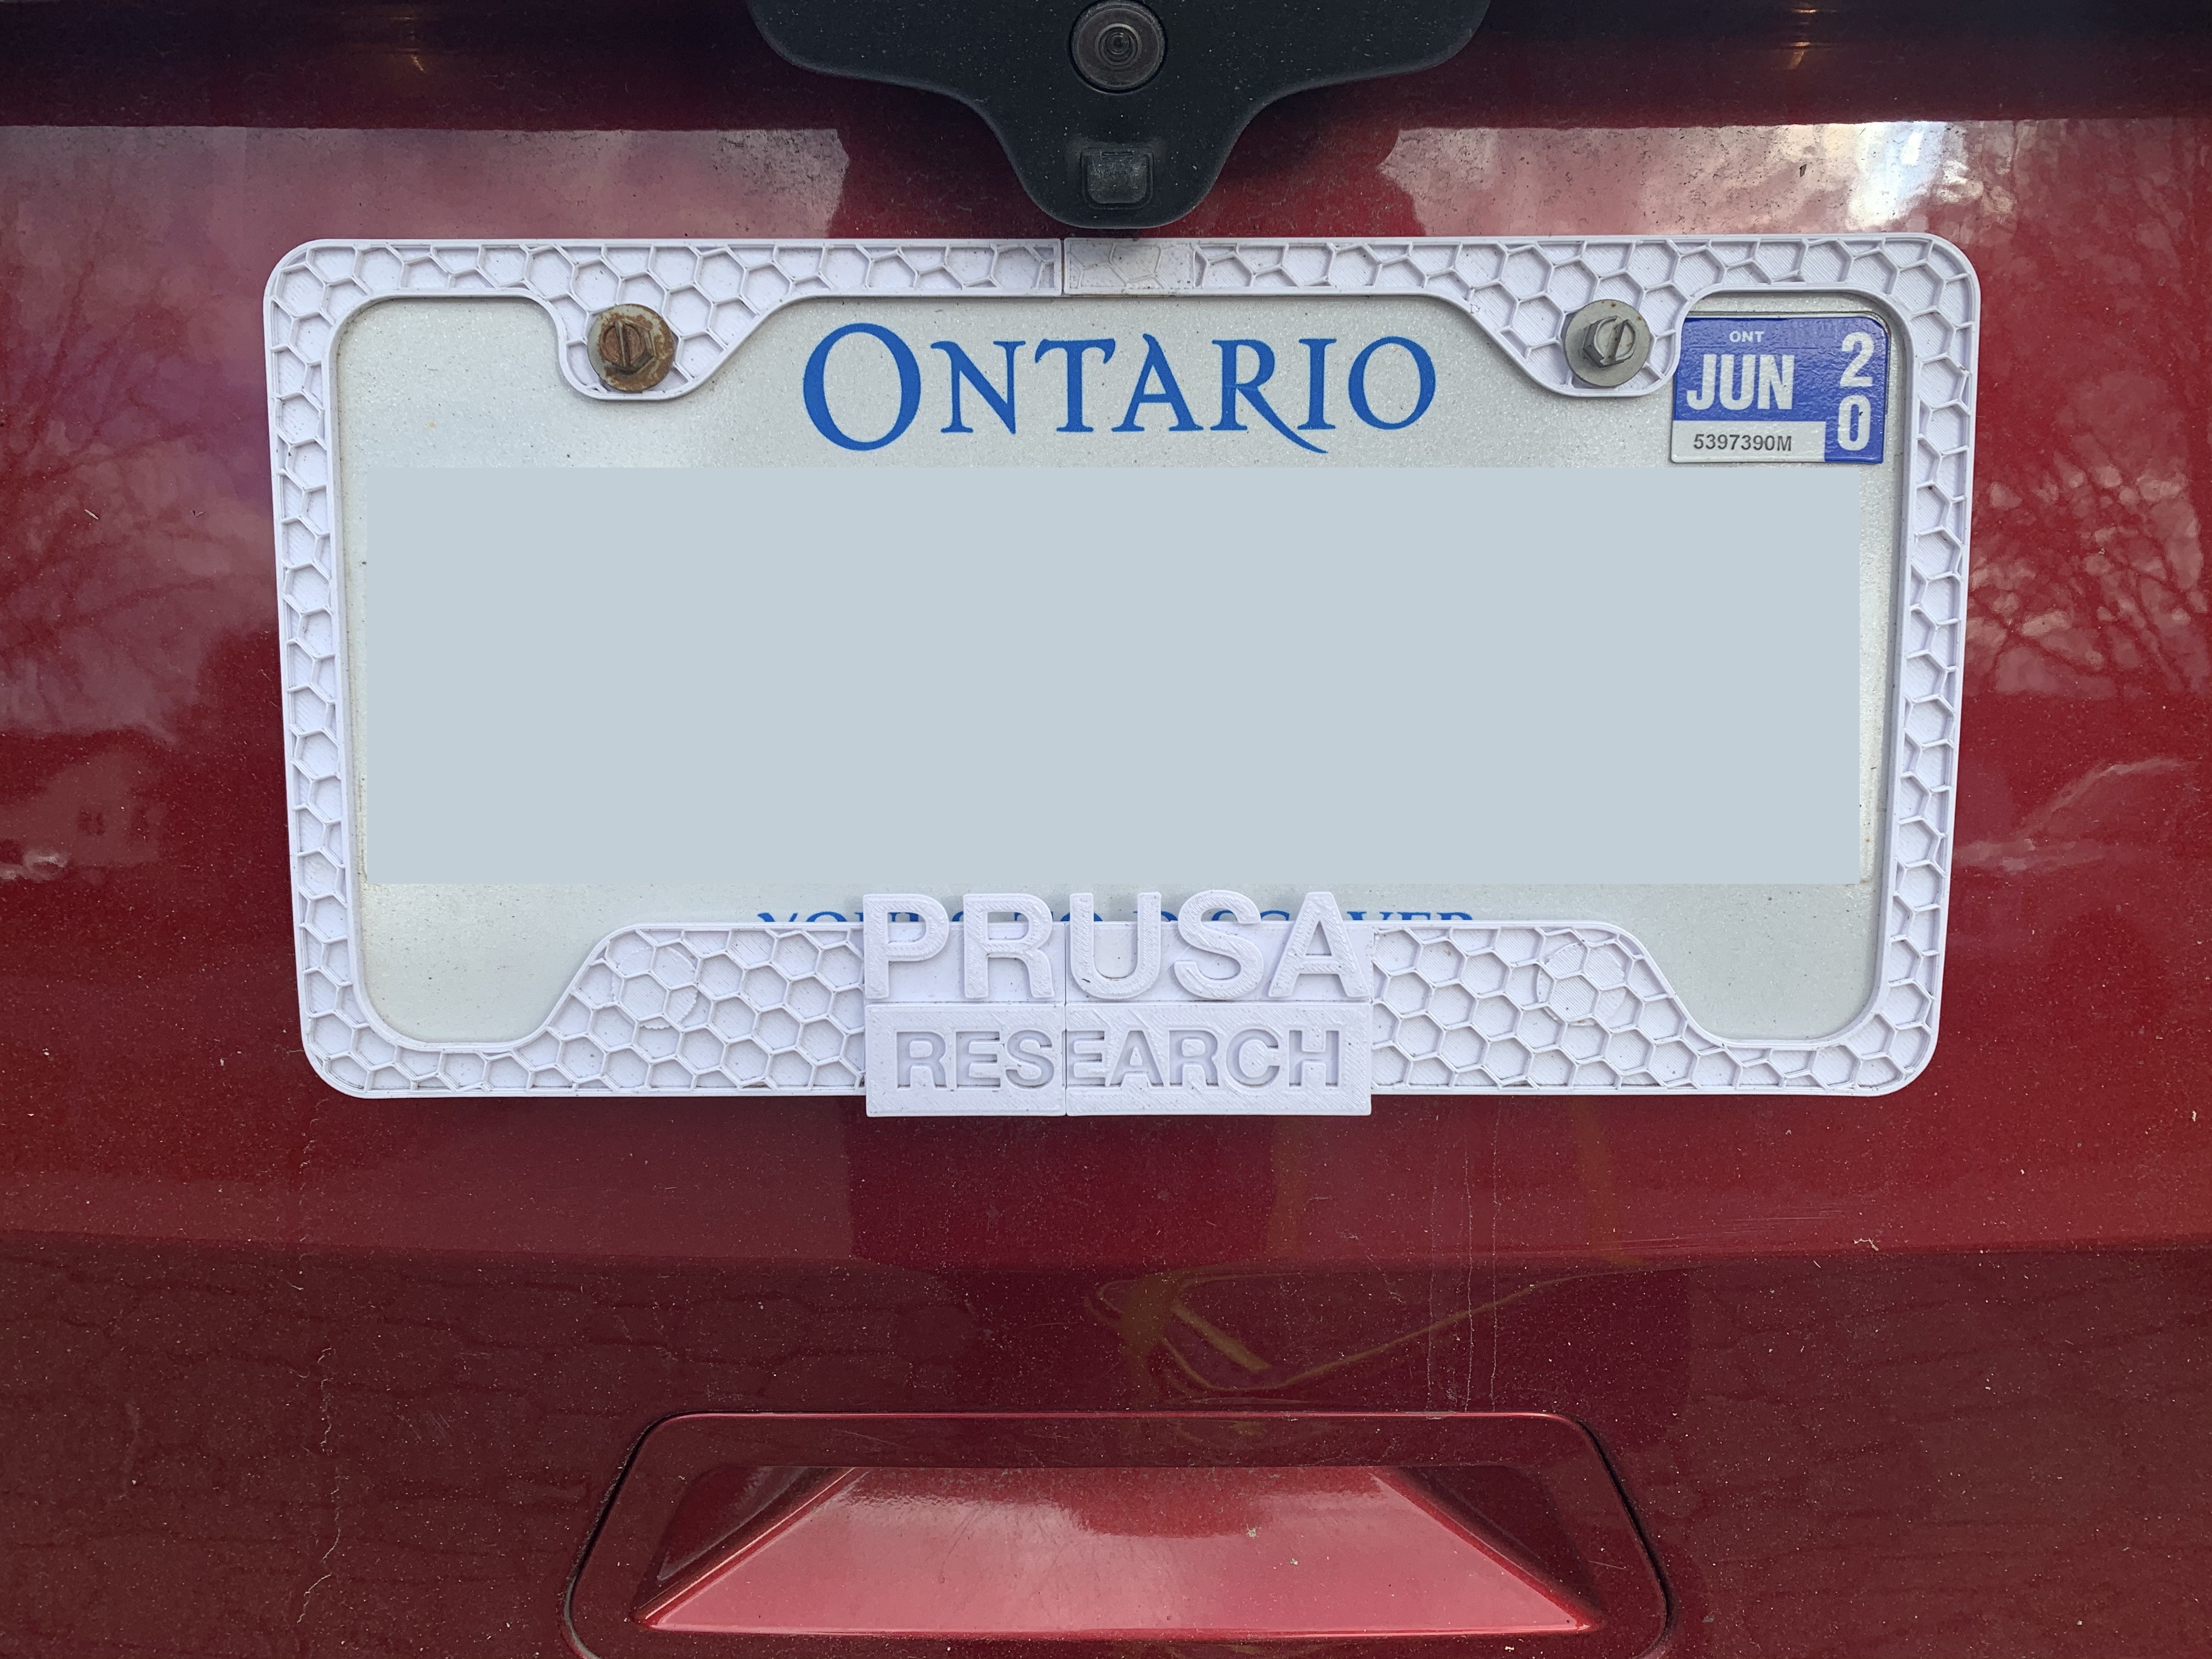 Prusa License Plate Frame